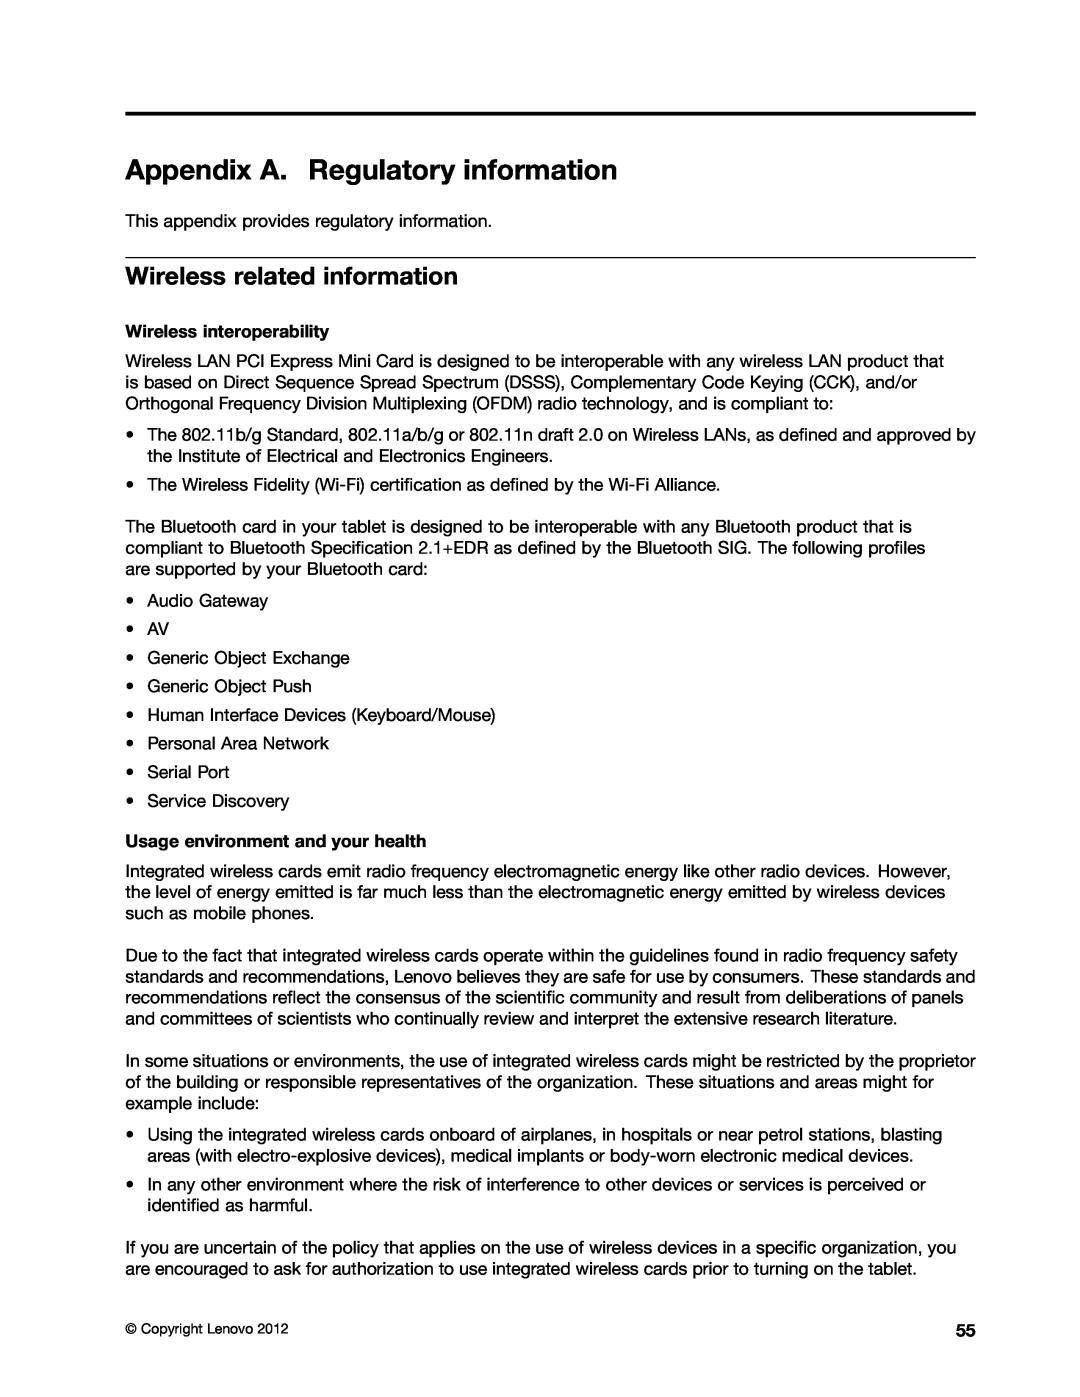 Lenovo 367922U, 36822AU manual Appendix A. Regulatory information, Wireless related information, Wireless interoperability 